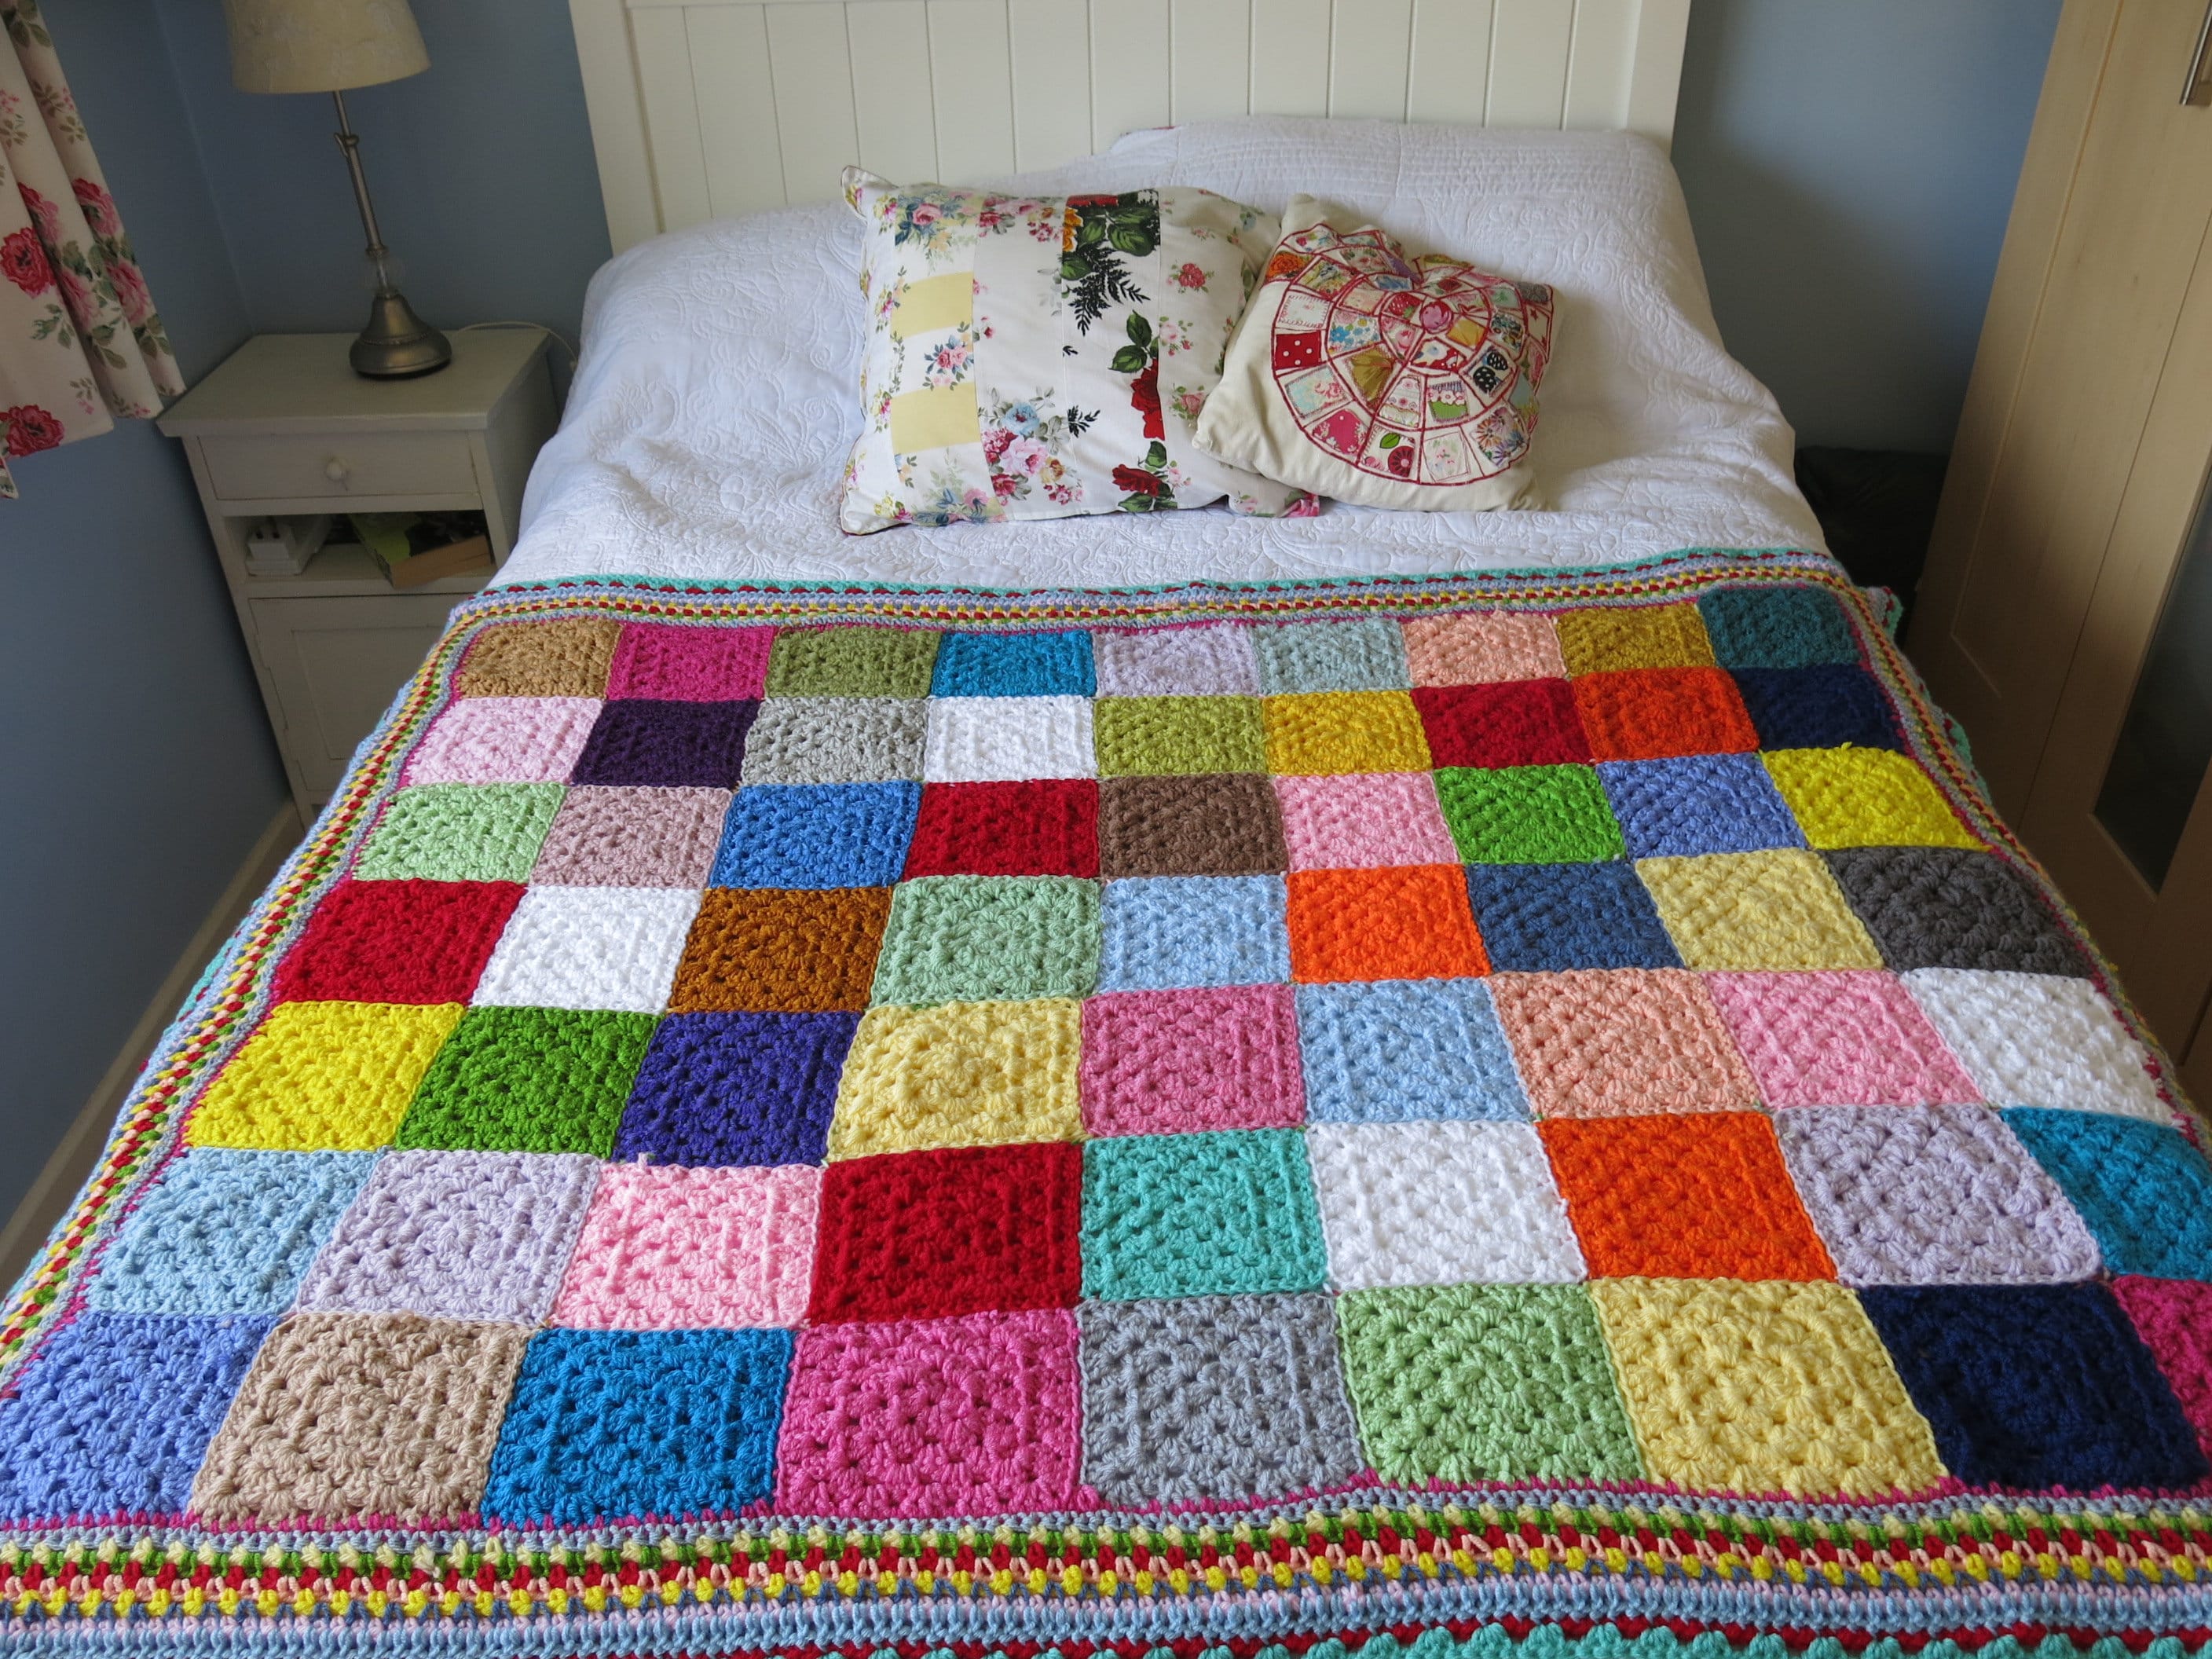 100 Granny Squares to Crochet Patterns Book in PDF afghans, Clothing,  Crafts, Beginner, Expert, Motifs, Design K101 